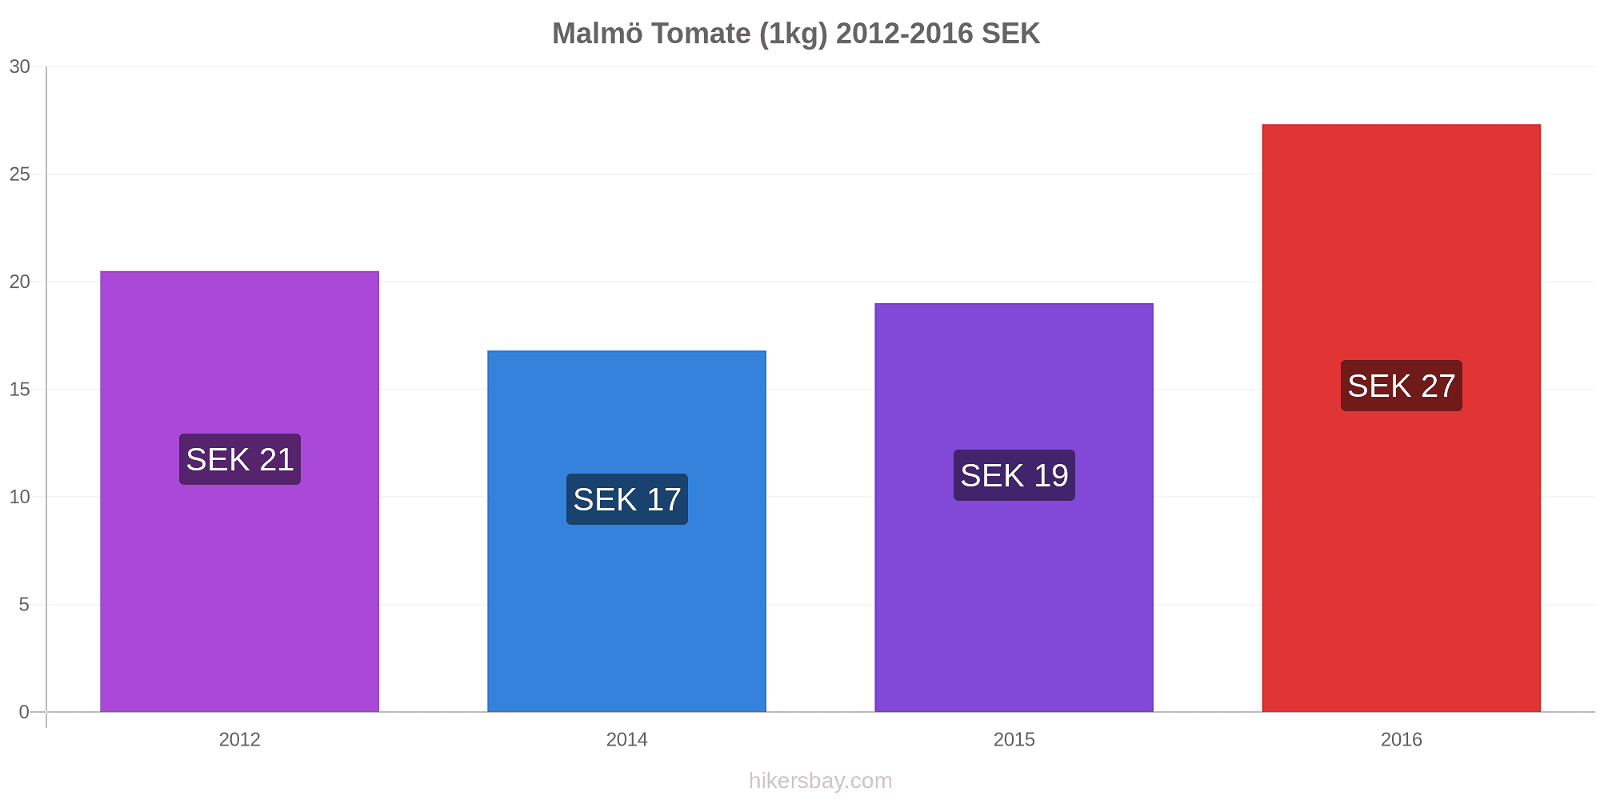 Malmö changements de prix Tomate (1kg) hikersbay.com